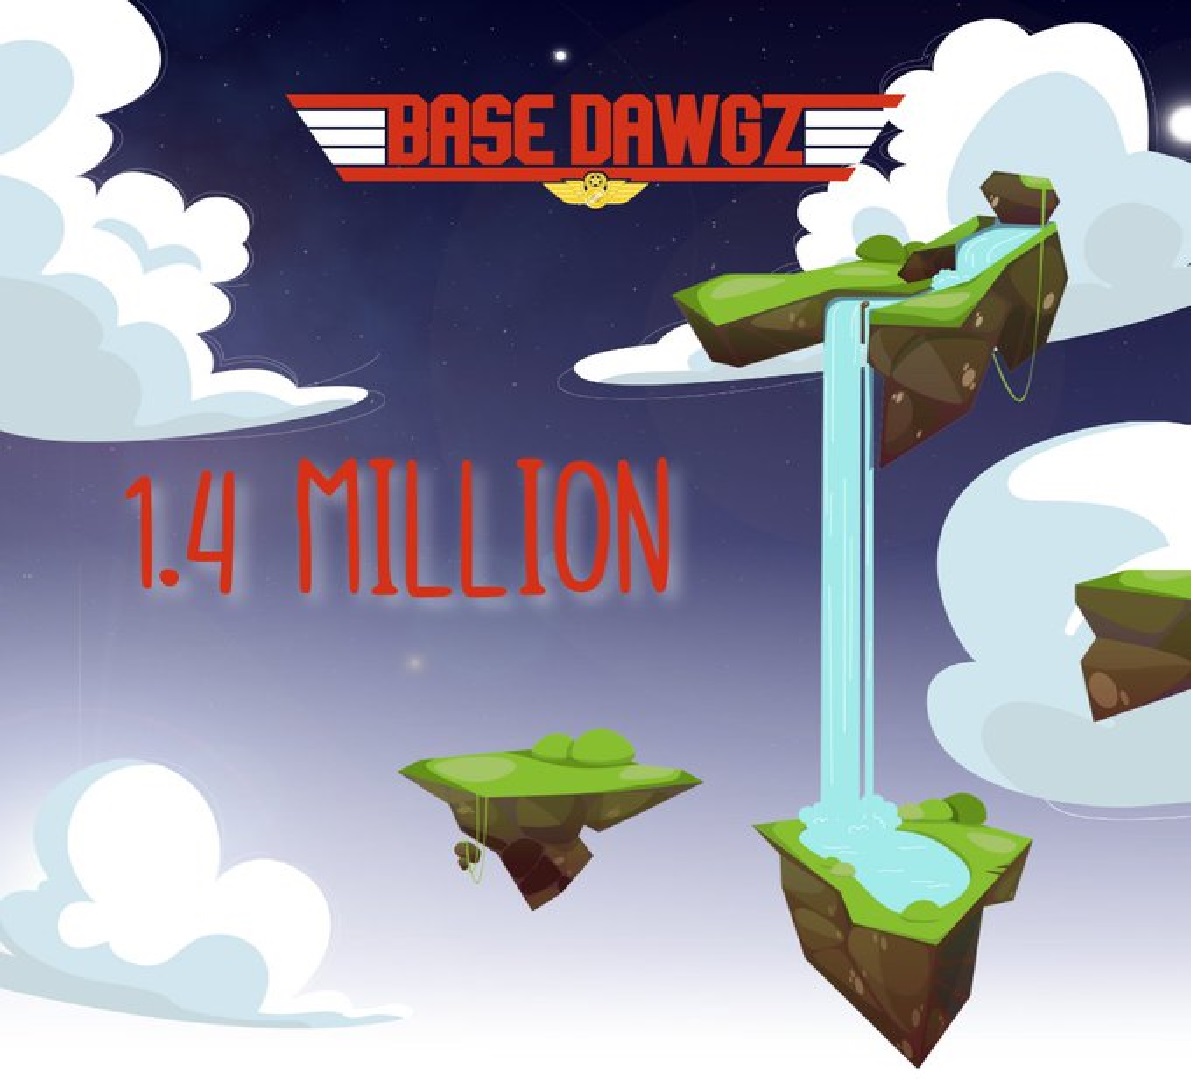 DAWGZ Presale Raised Over $1.4 Million